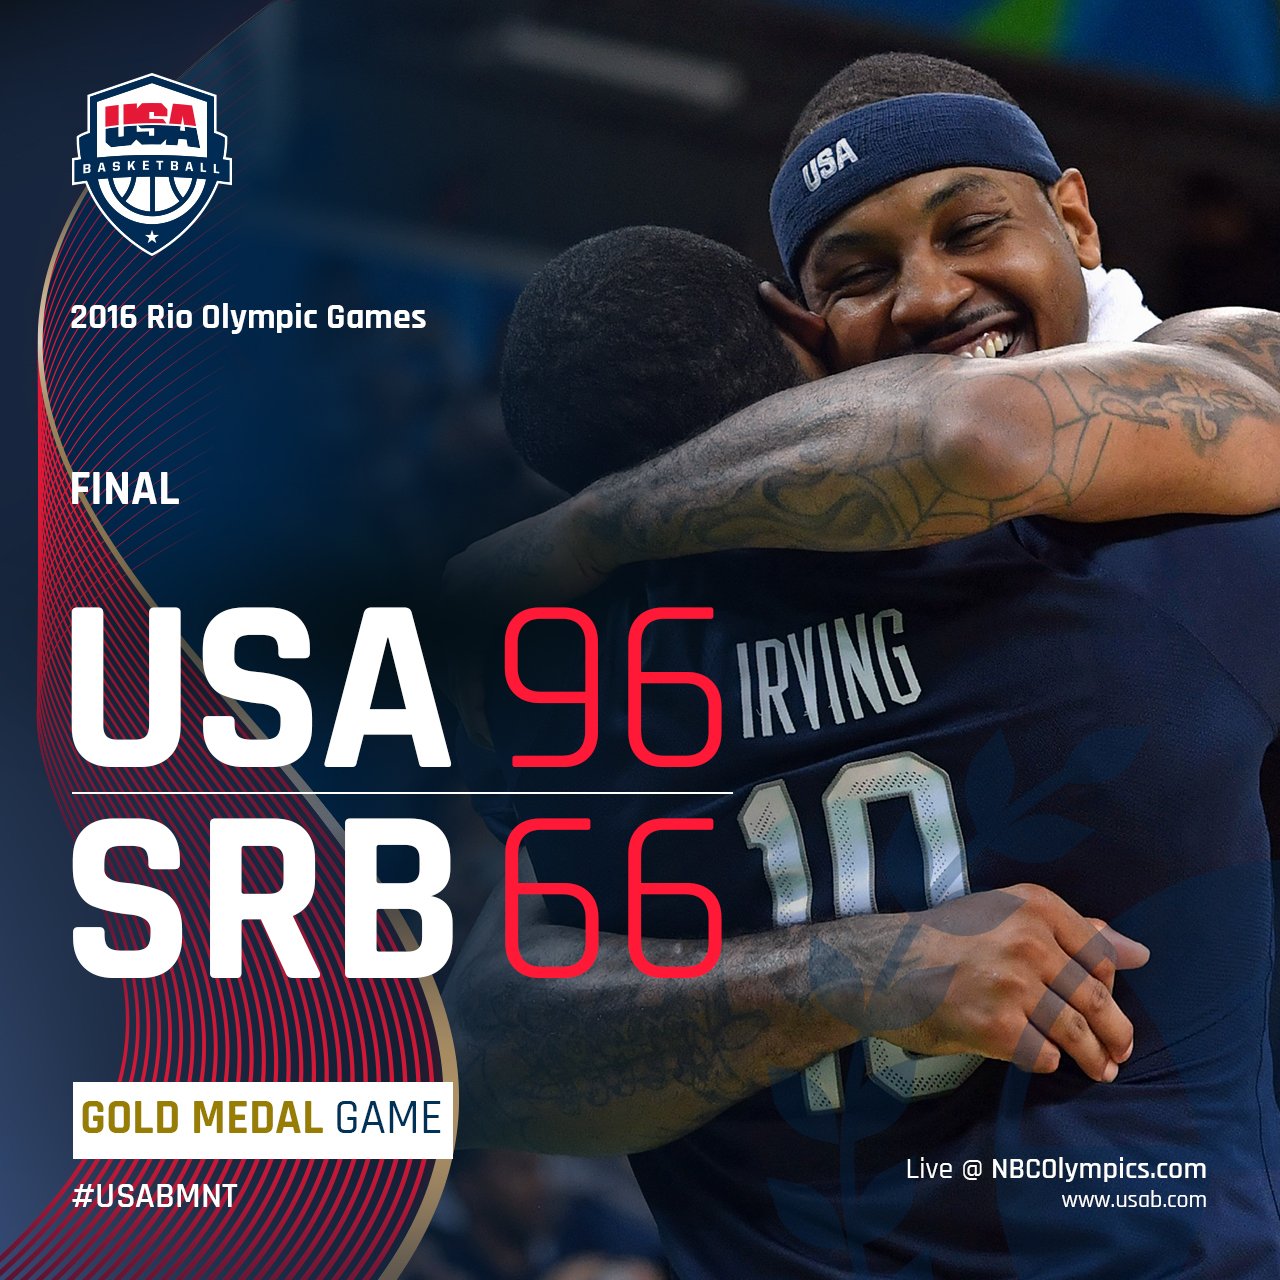 Usa Basketball Final Usa 96 Srb 66 Usabmnt In Olympics 25 Game Win Streak 3 Straight Recap T Co Evyojmvxkx